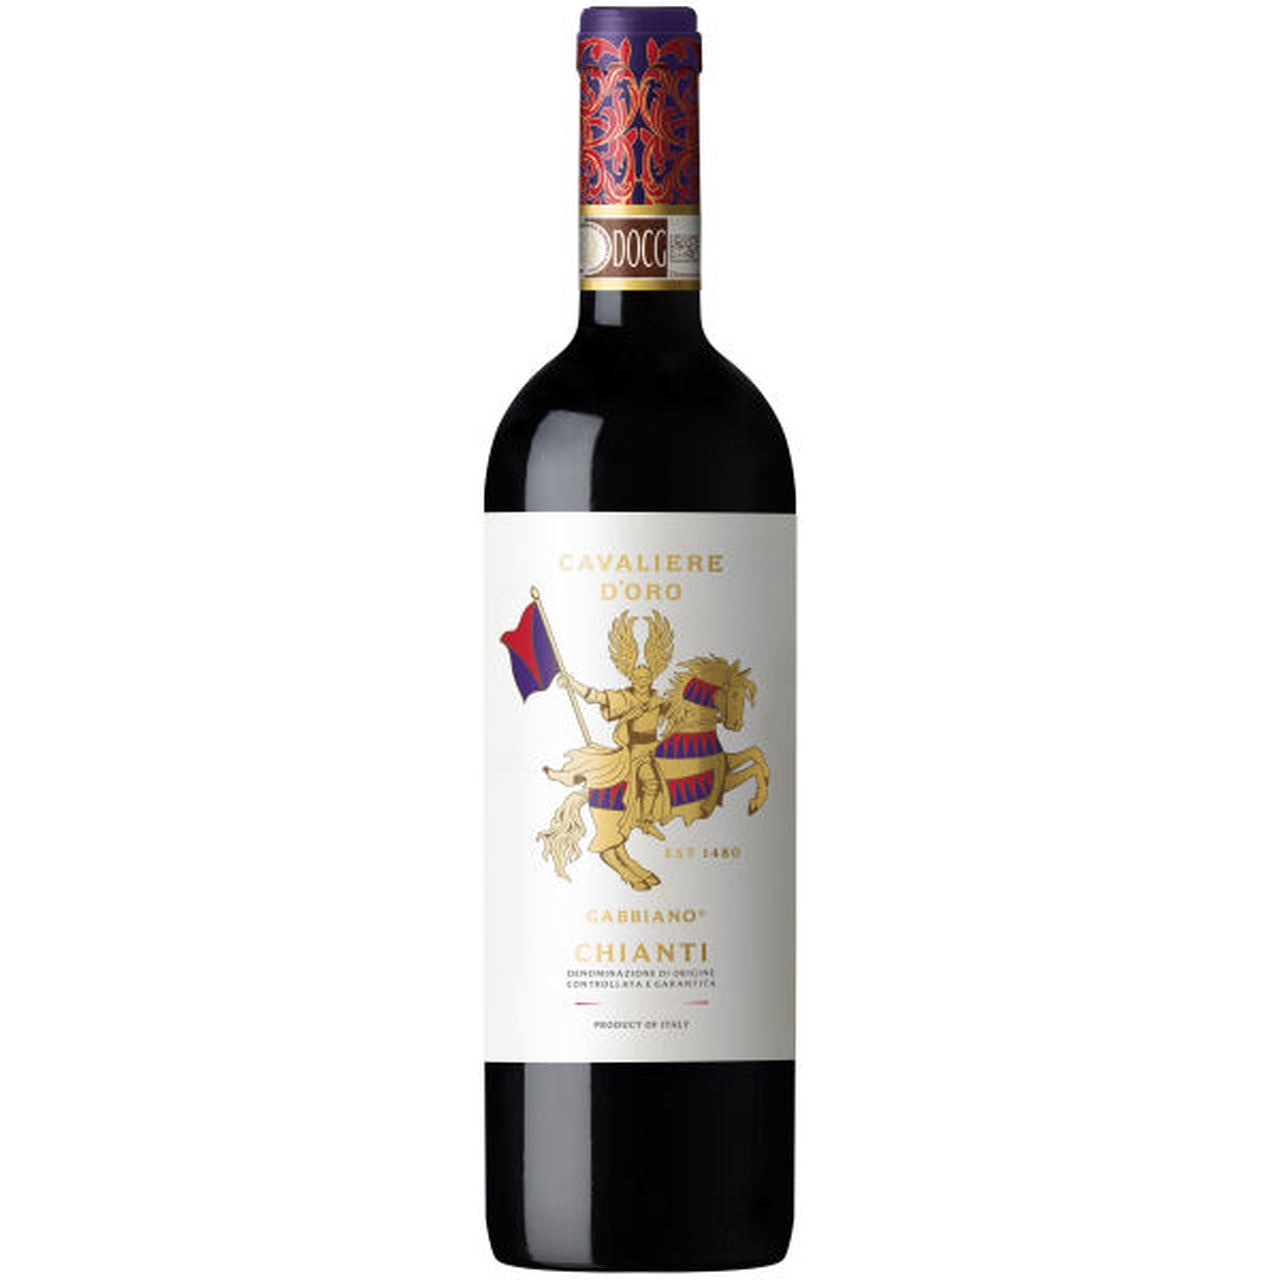 images/wine/Red Wine/Gabbiano Cavaliere d'Oro Chianti.jpg